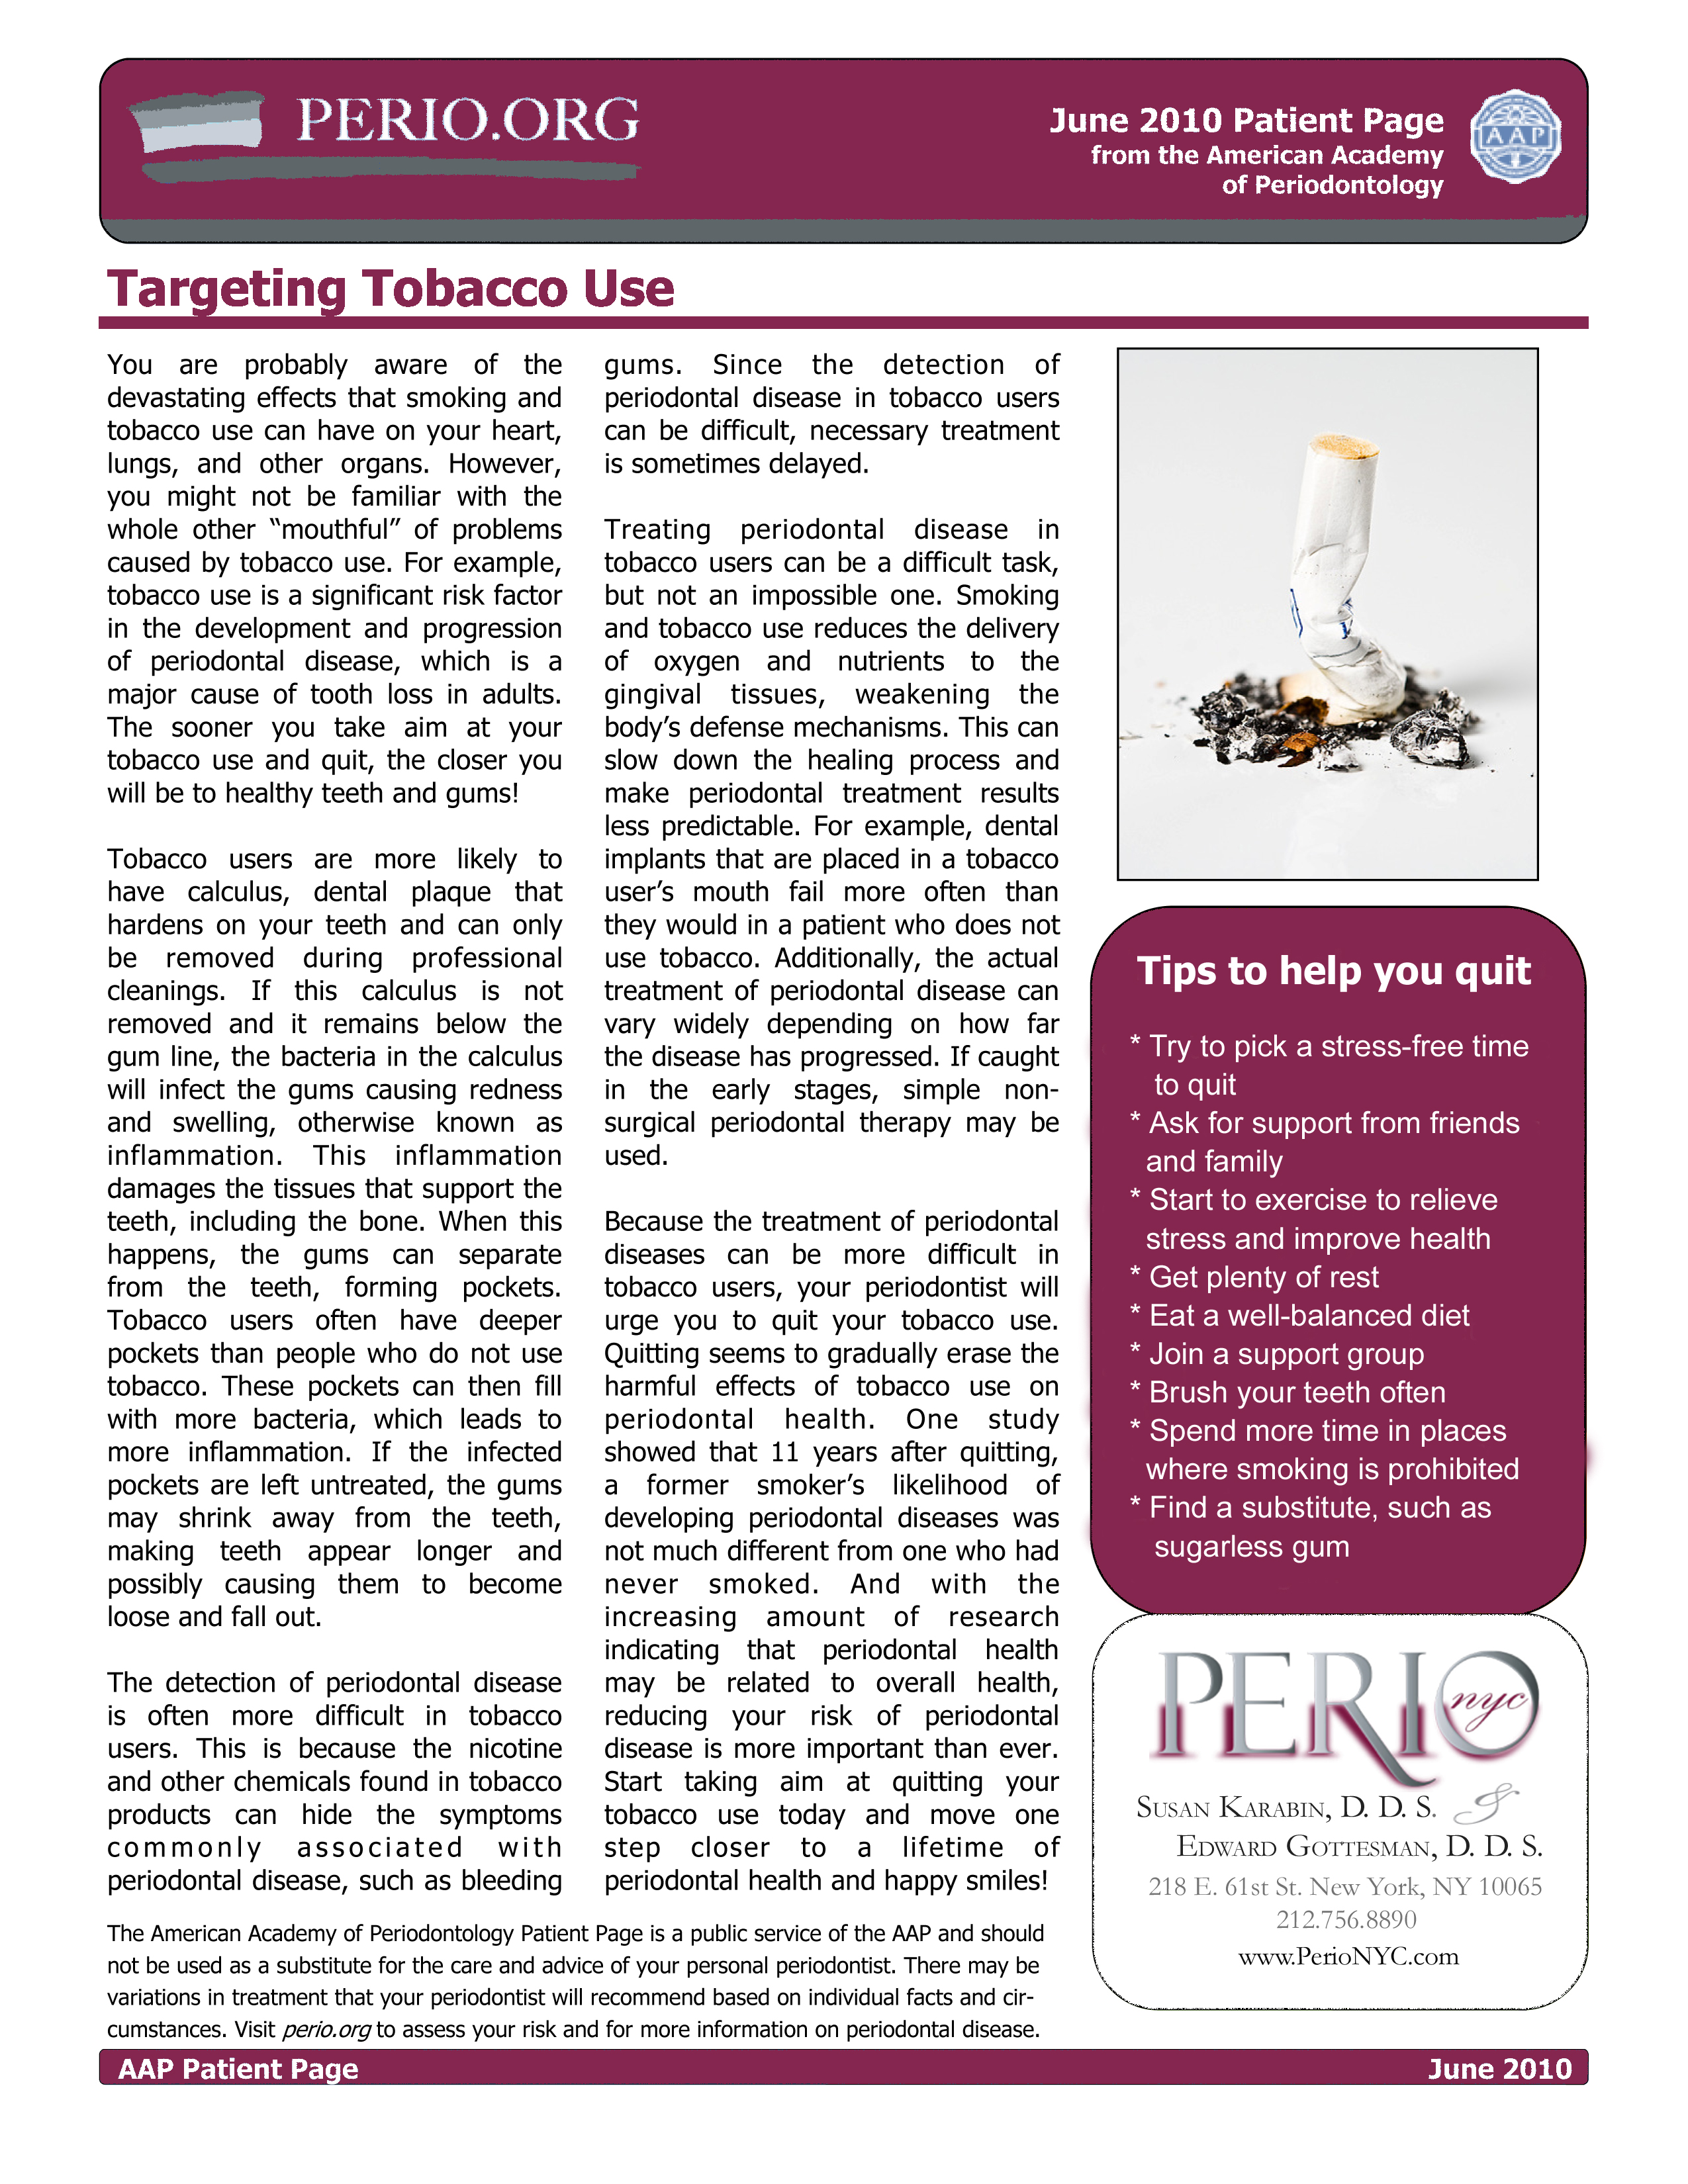 Targeting tobacco use